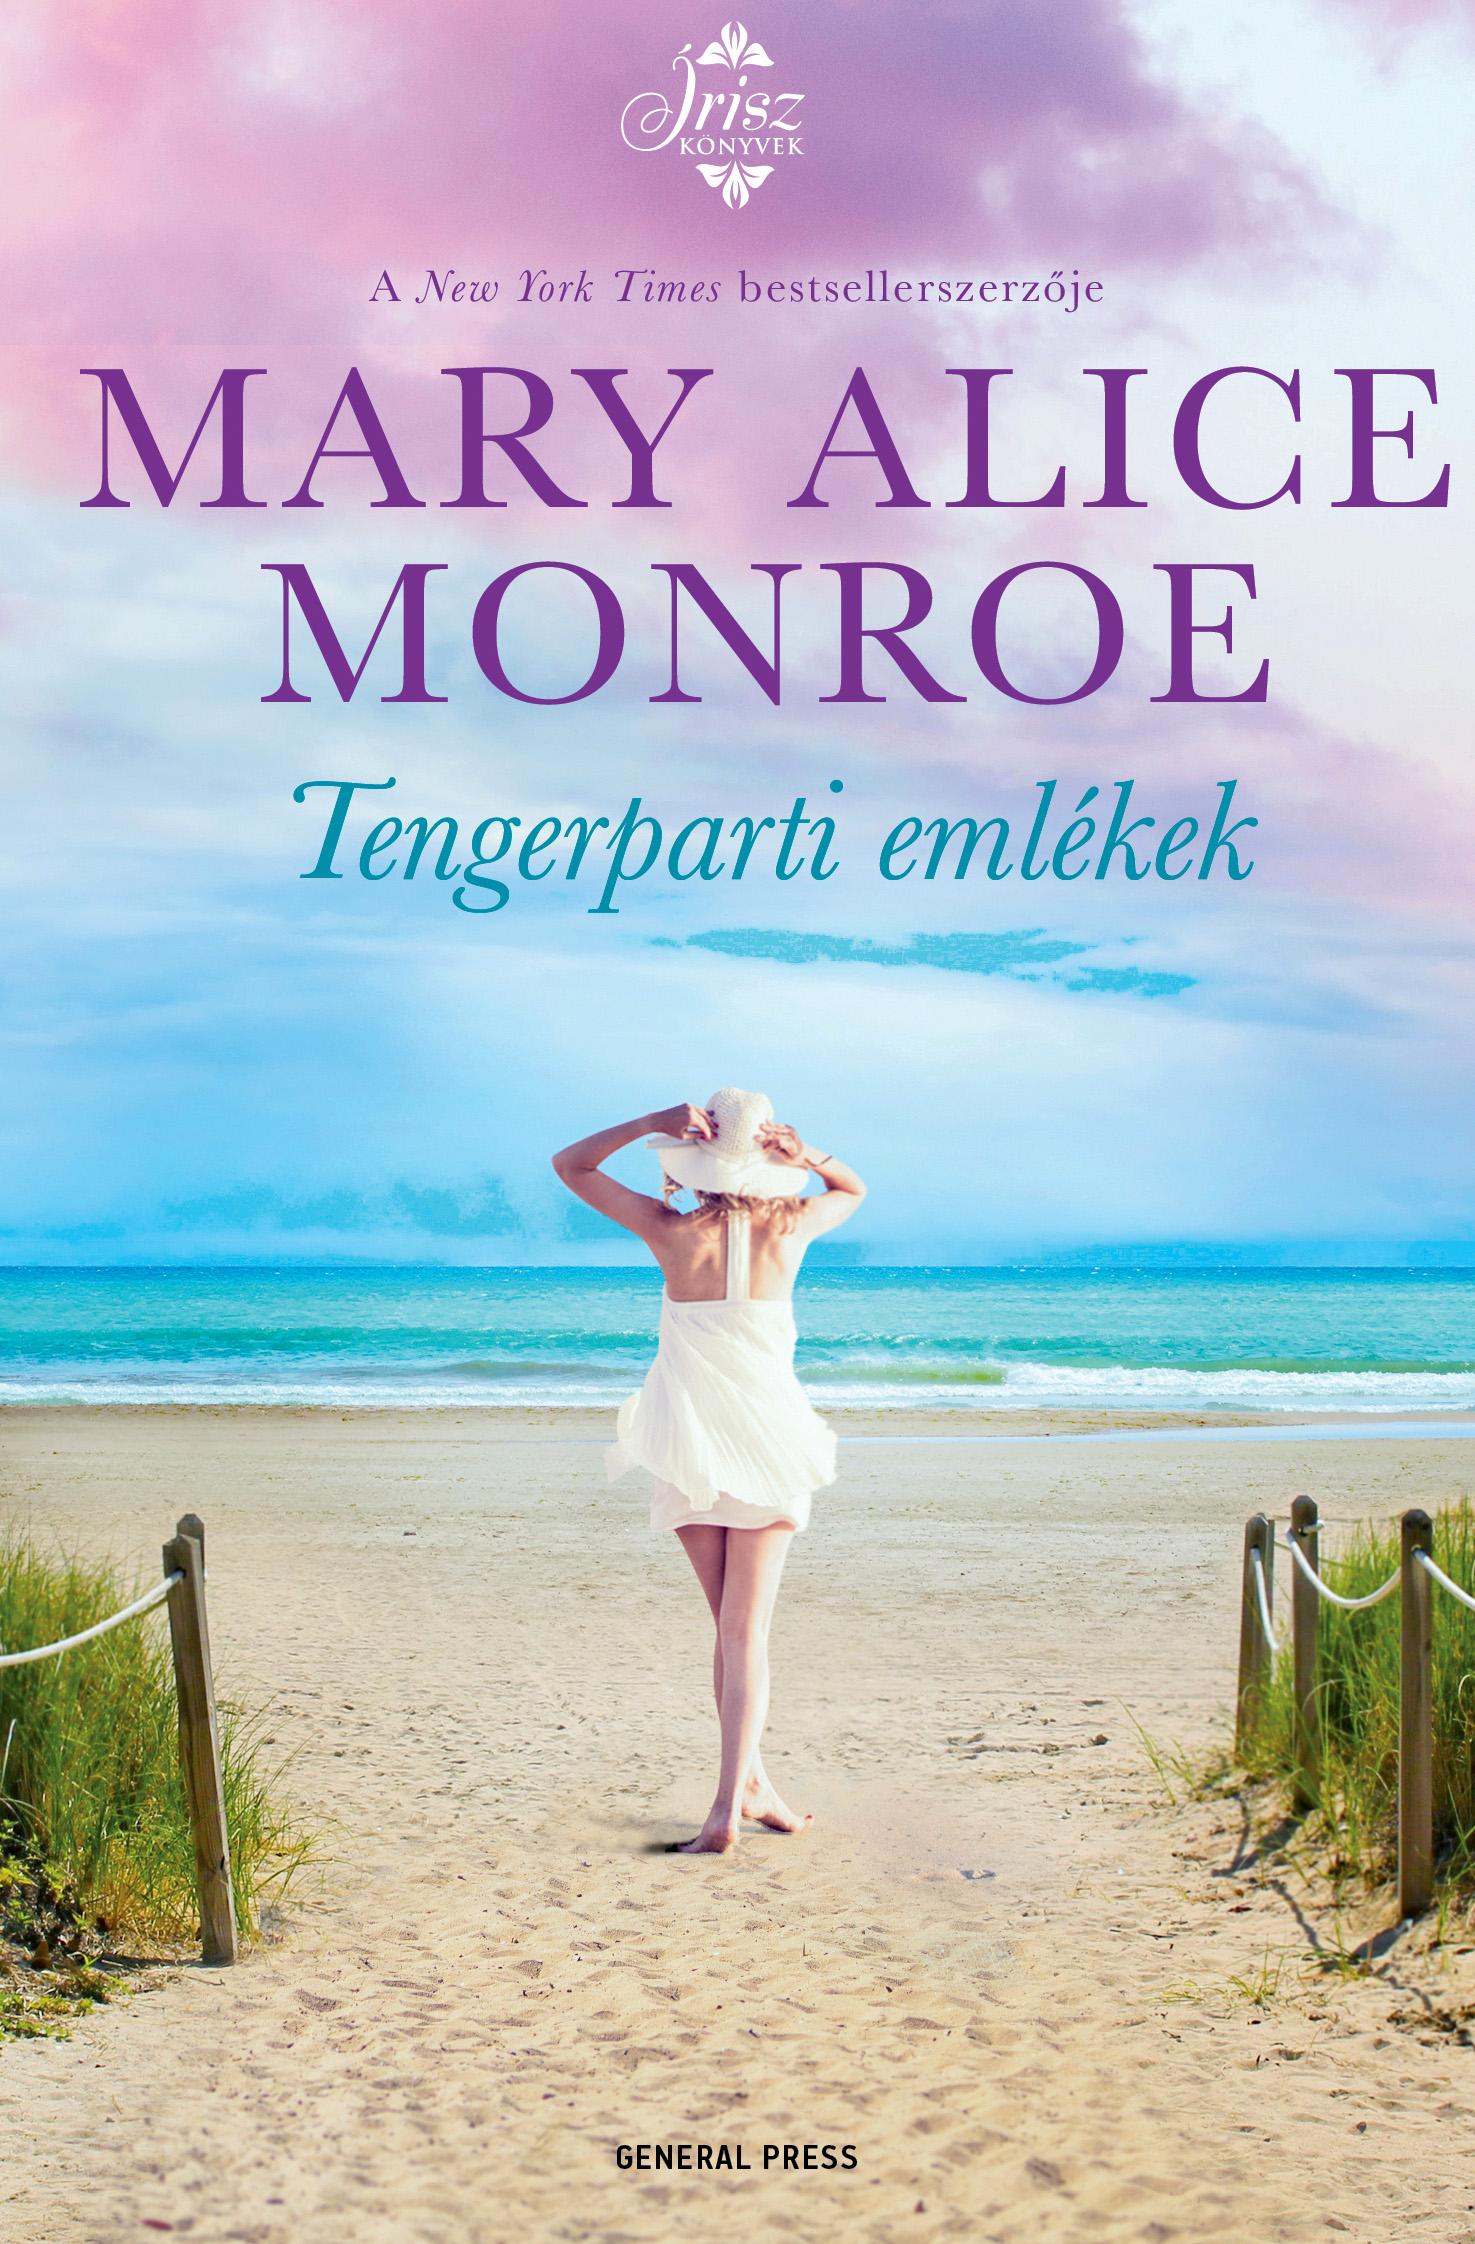 Mary Alice Monroe - Tengerparti emlékek [outlet]